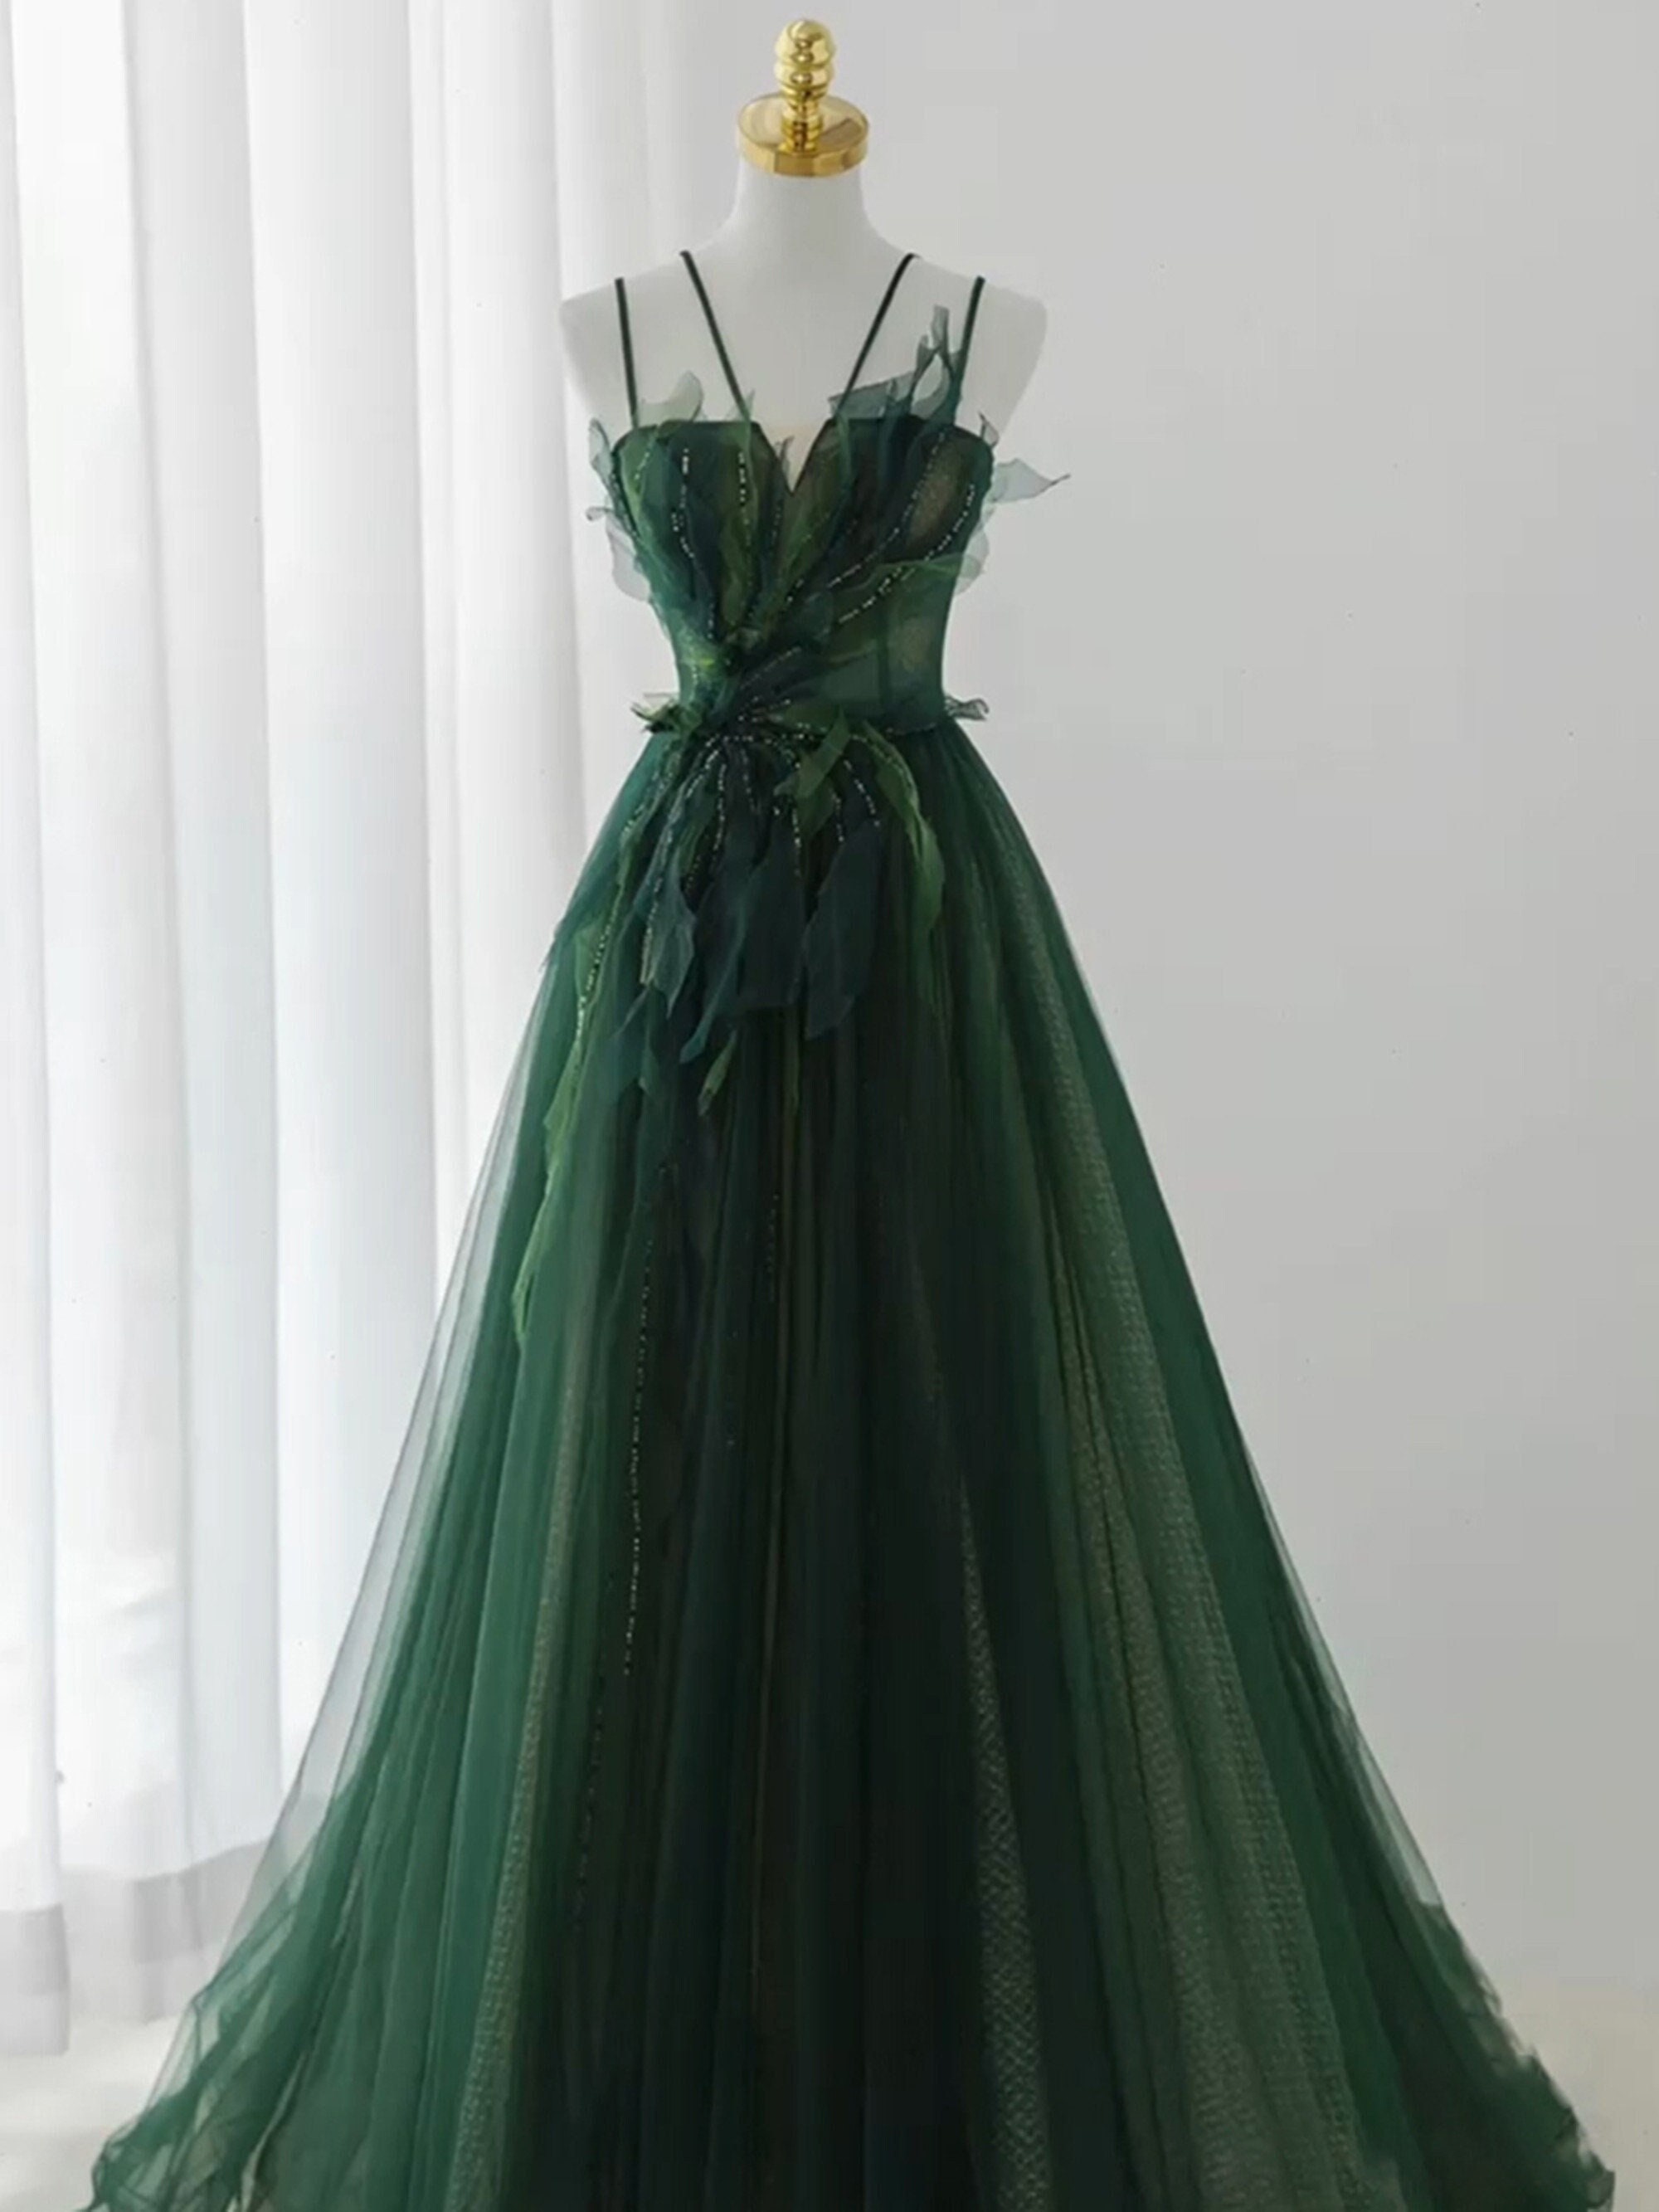 Divanor Girl's Emerald Green Bottle Birthday Gown Dress ( PrettyEx_15 , 5-8  Years) : Amazon.in: Clothing & Accessories